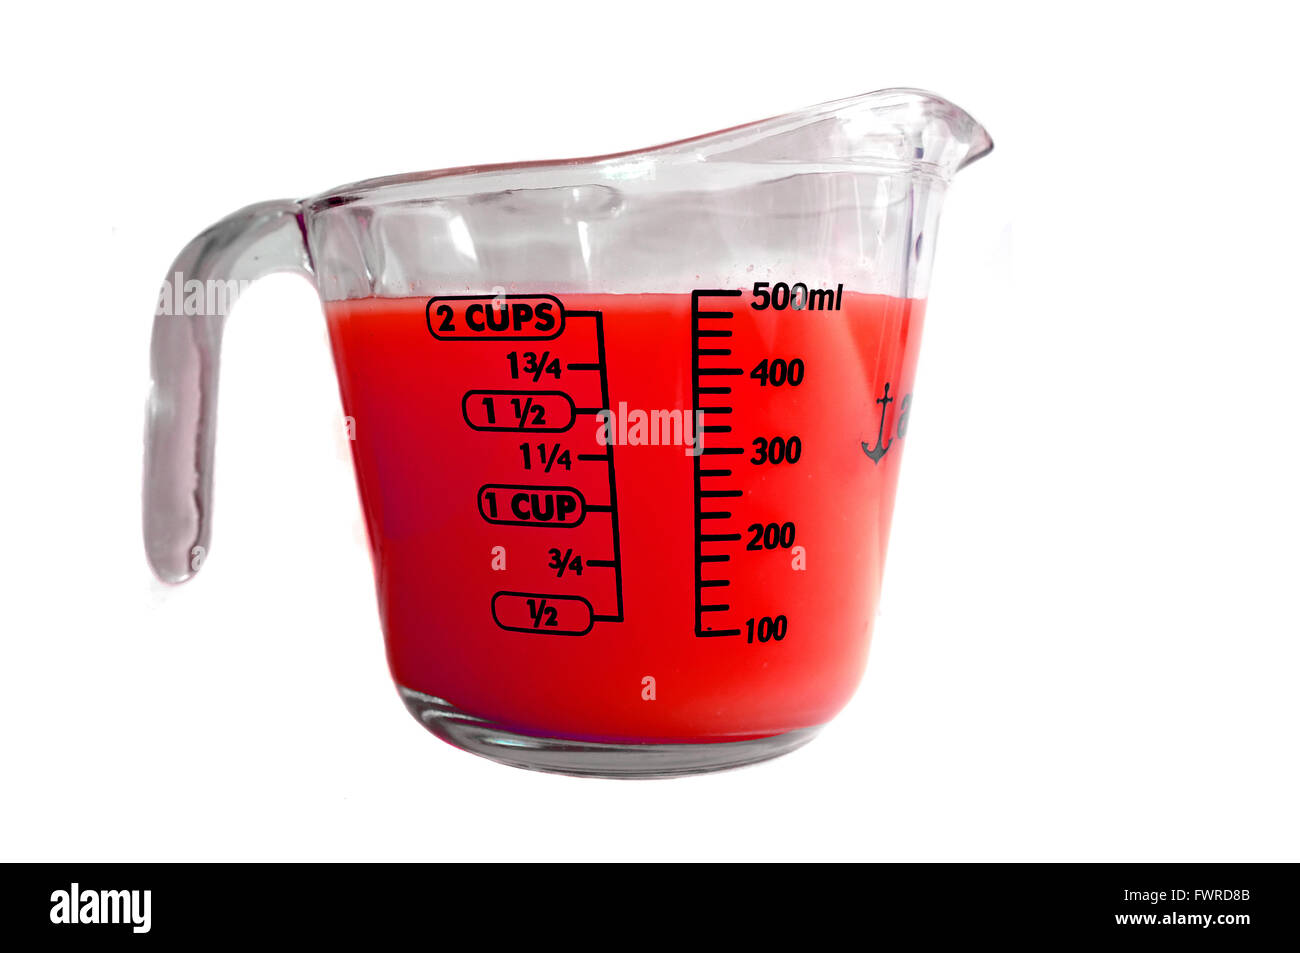 https://c8.alamy.com/comp/FWRD8B/a-pyrex-measuring-jug-full-of-red-coloured-liquid-photographed-against-FWRD8B.jpg